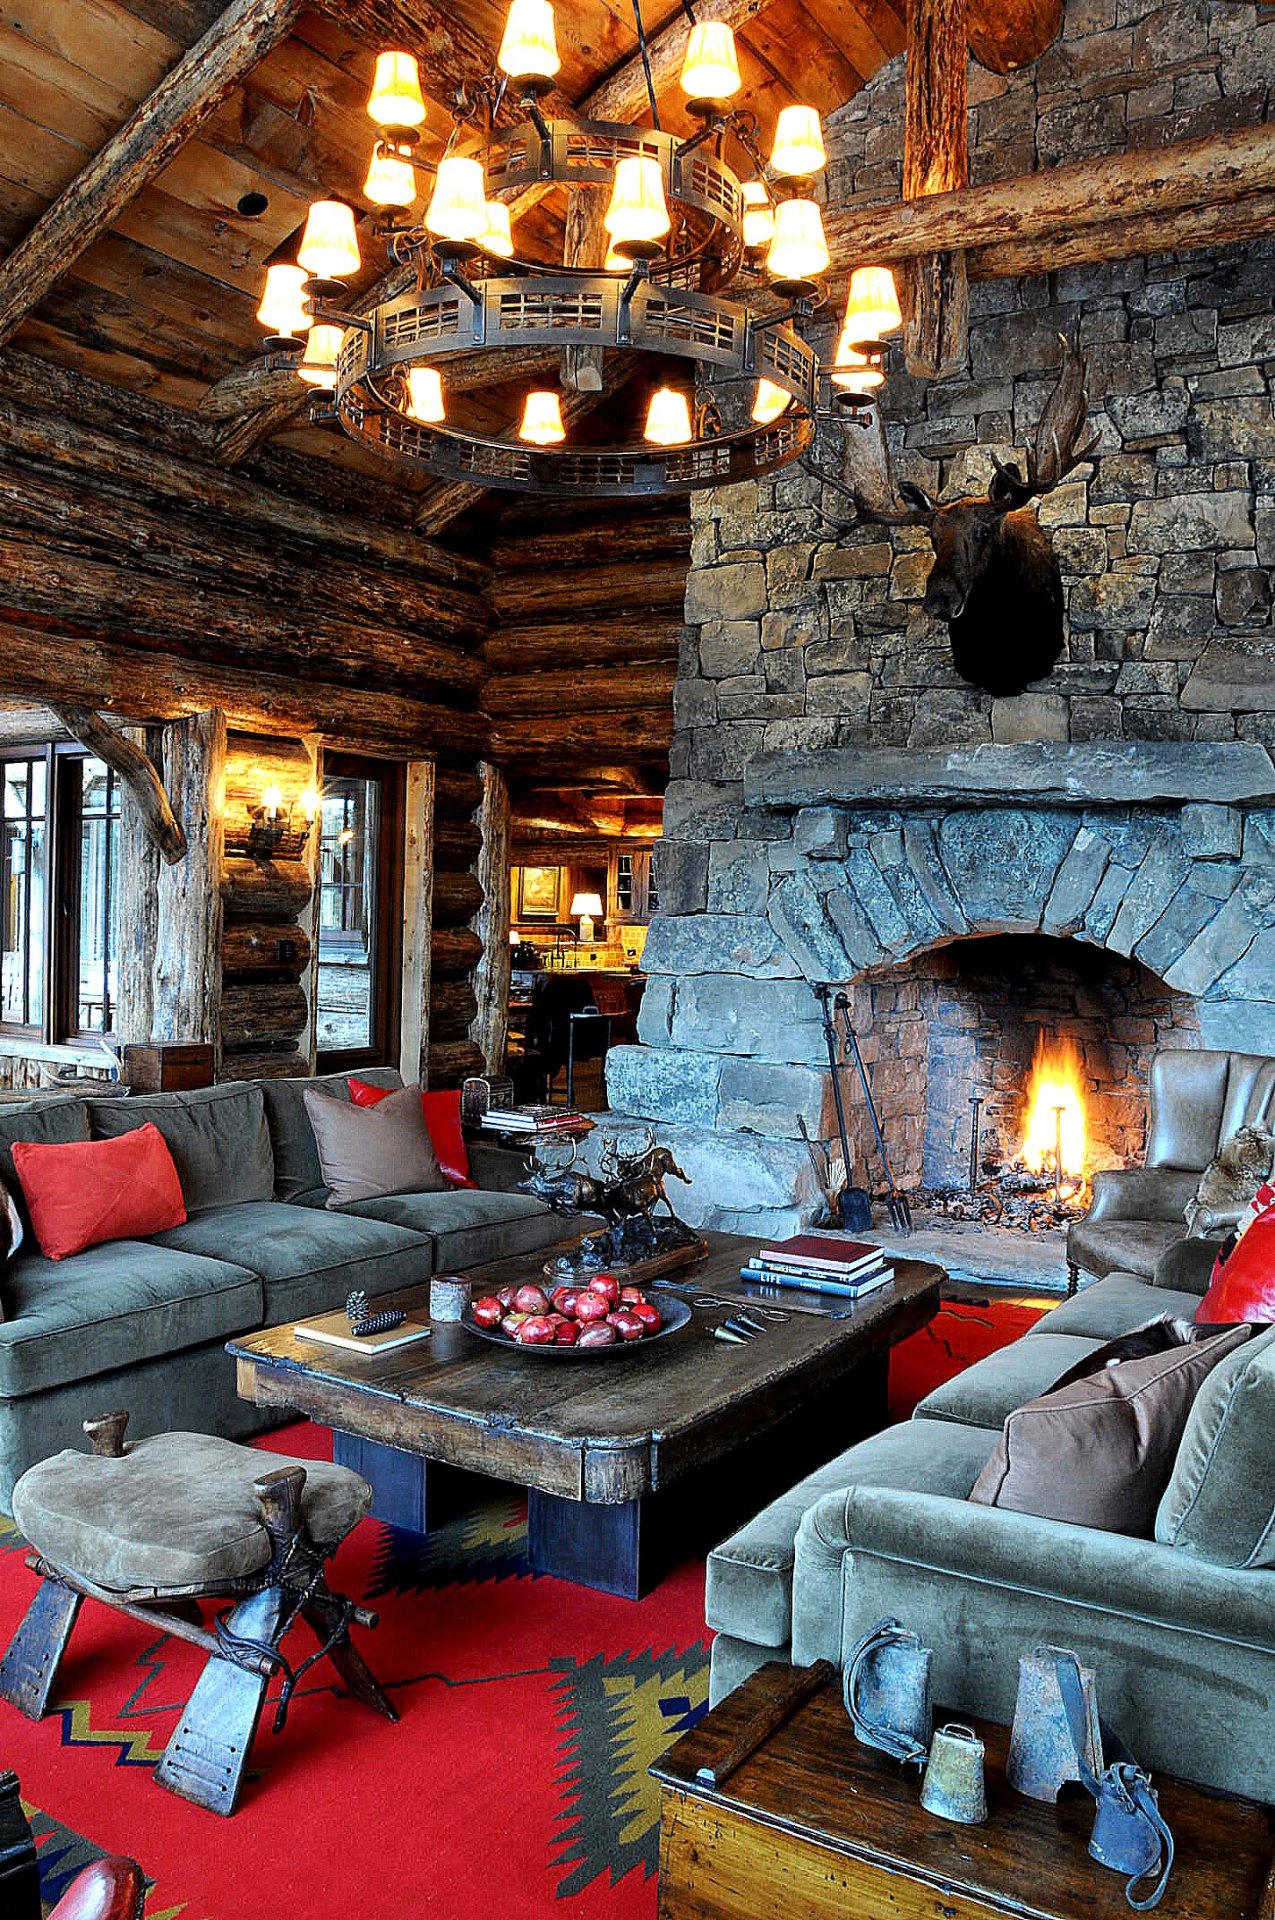 Adorable Home — Cozy ski lodge retreat Follow Adorable Home for